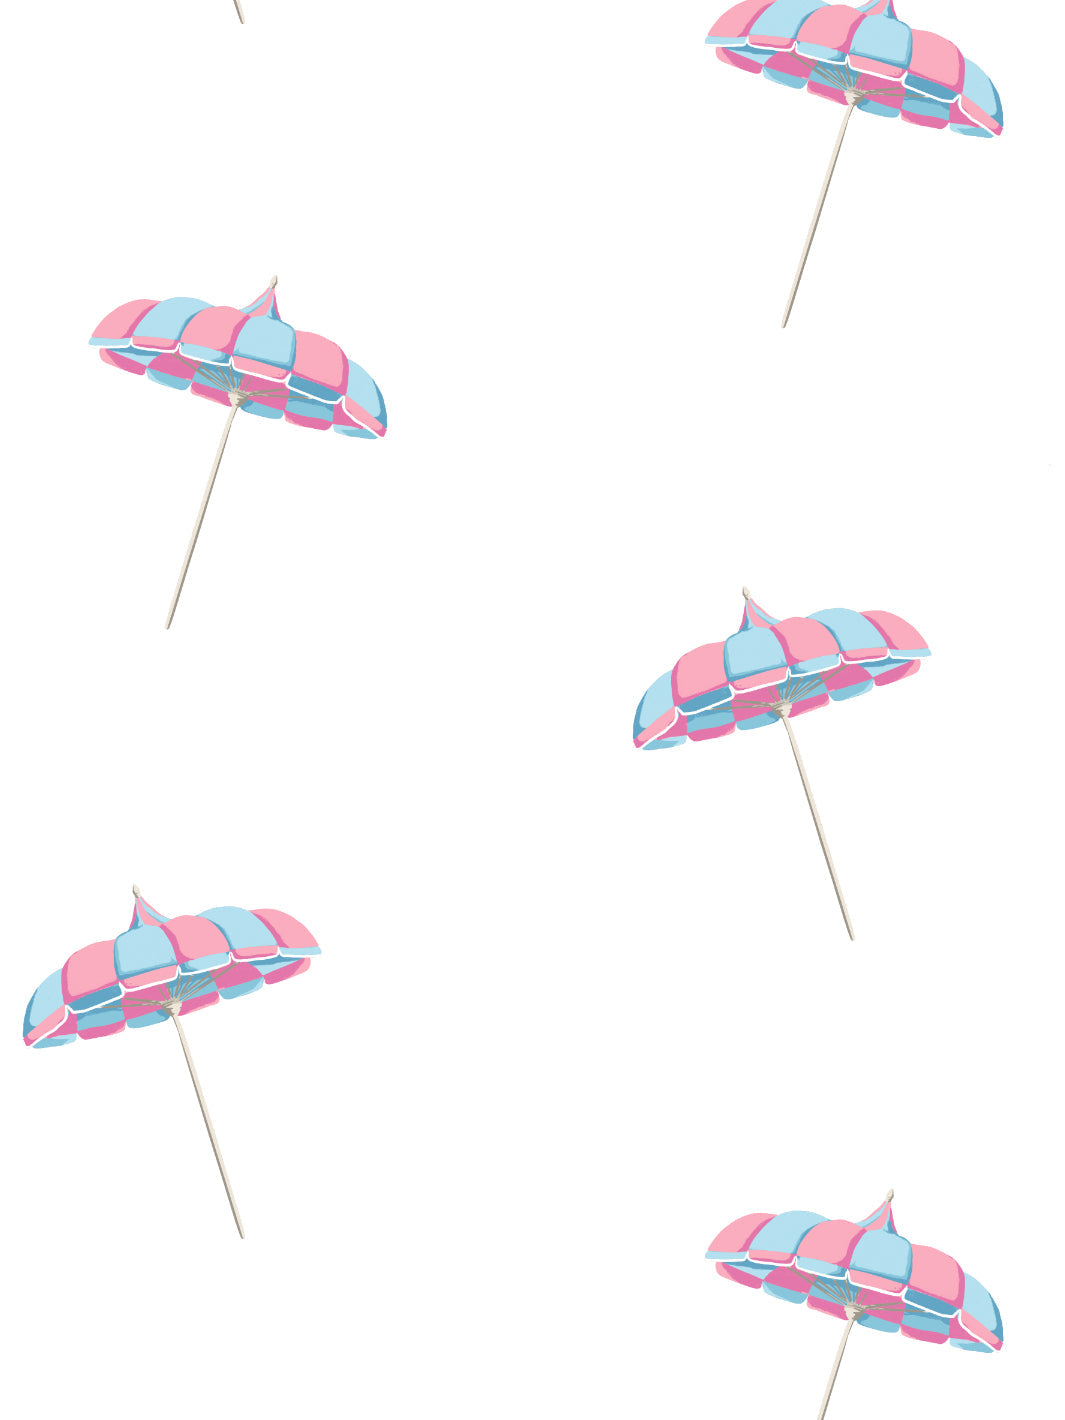 'Barbie™ Land Umbrella' Wallpaper by Barbie™ - Pink / Blue